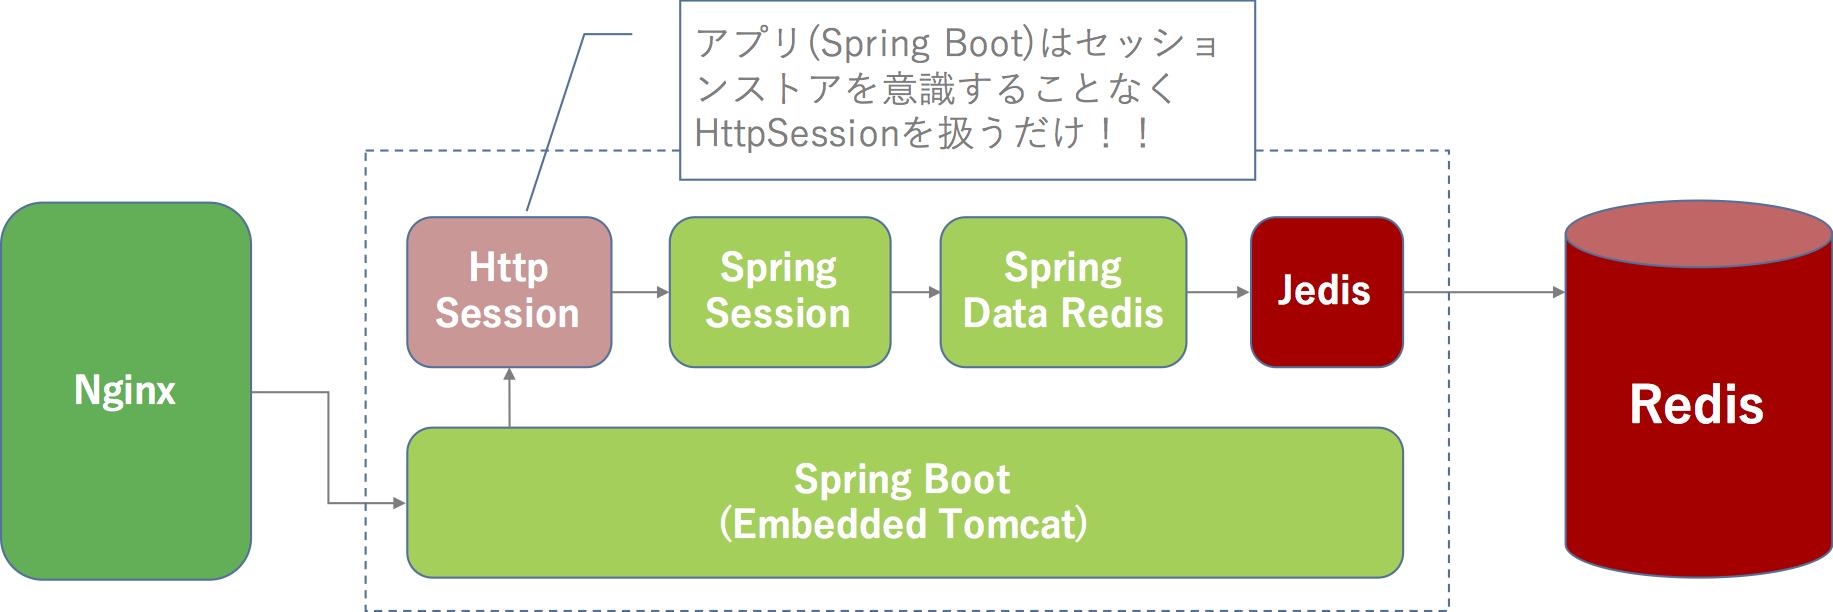 Java Redis. Изображение Spring Boot. Spring Boot схема работы. Redis для сессий. Spring data starter